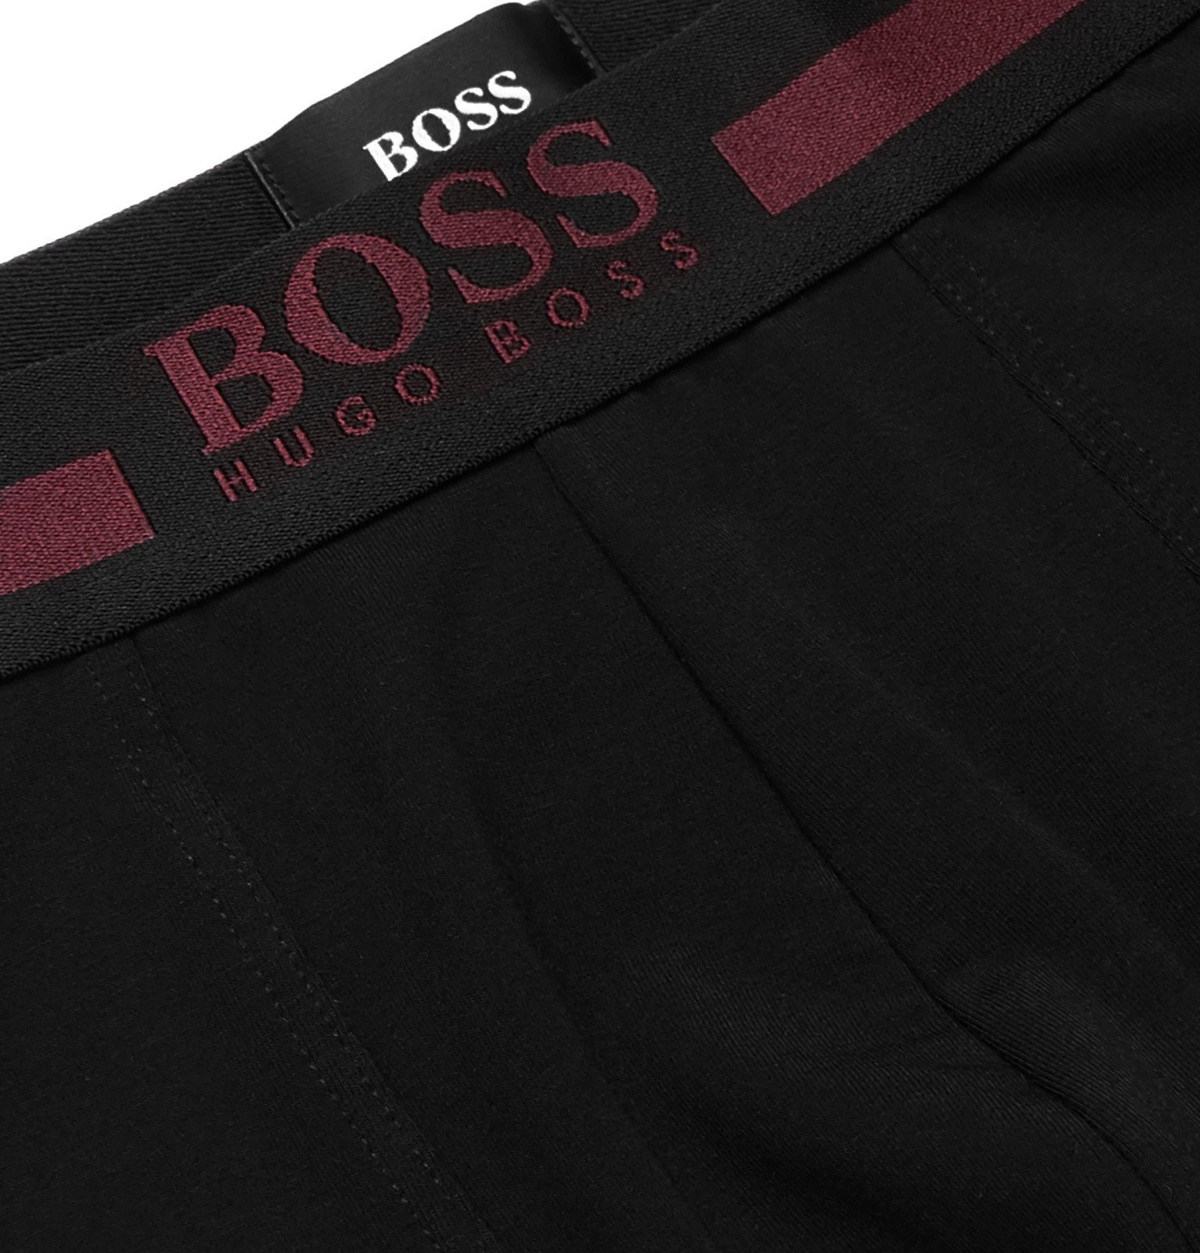 HUGO Bodywear thermal leggings in black with logo print